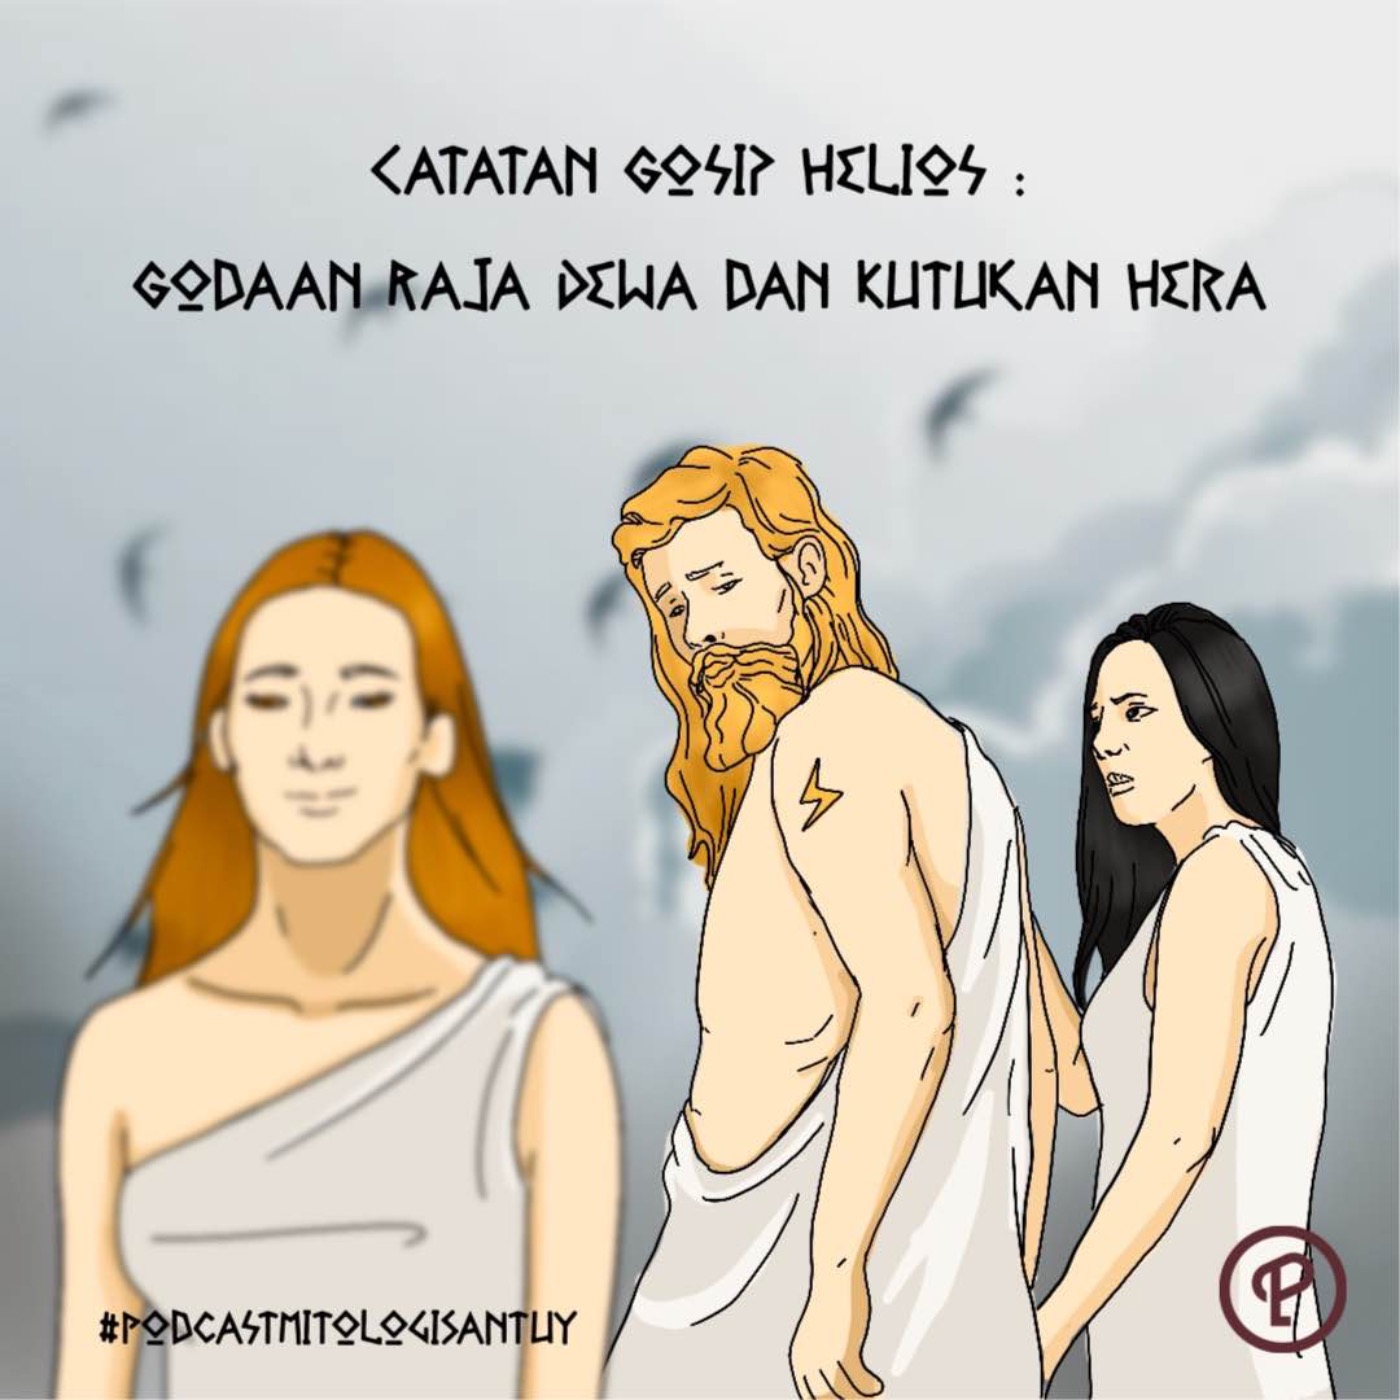 Catatan Gosip Helios : Godaan sang raja dewa dan kutukan Hera